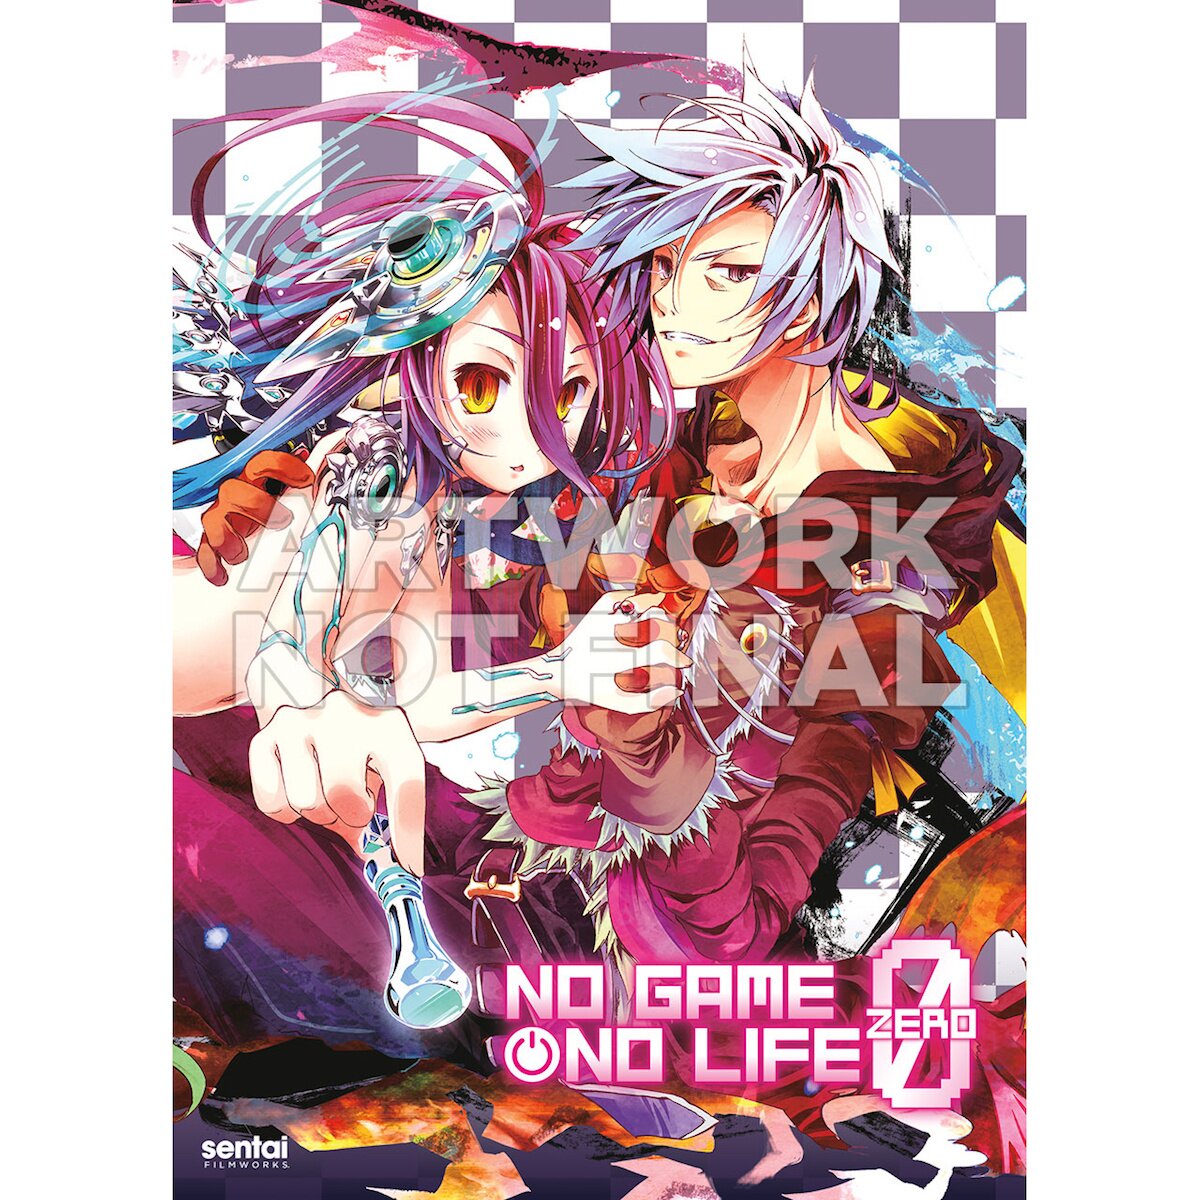 No Game, No Life (Season 1 + Movie) Complete Collection | Sentai Filmworks